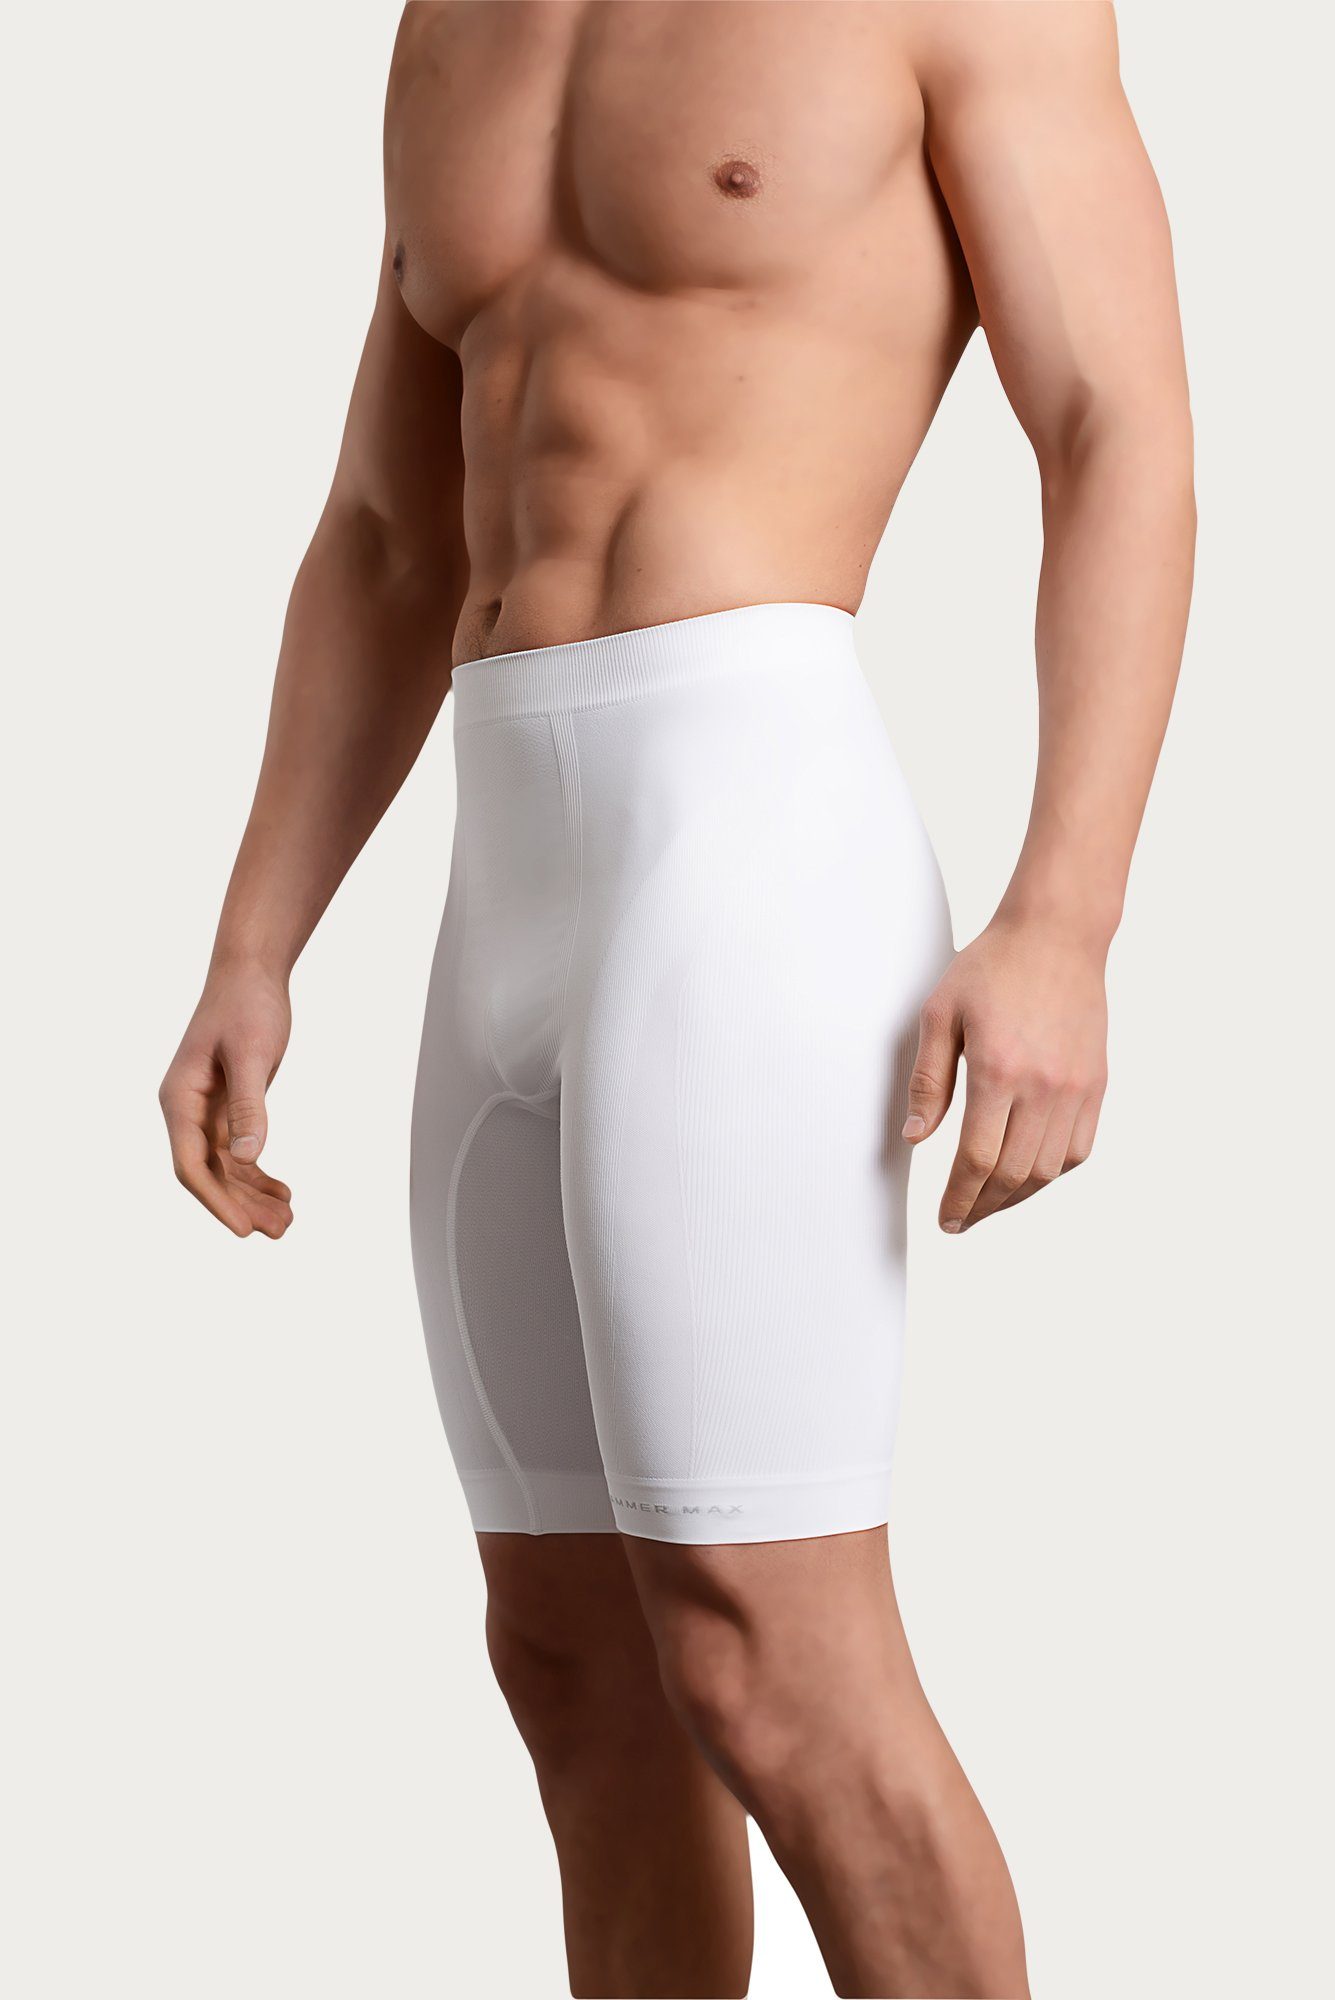 Performance® Gewebe Strammer atmungsaktives Compression Max Shorts Shapewear, High Weiß Tech Trainingsshorts